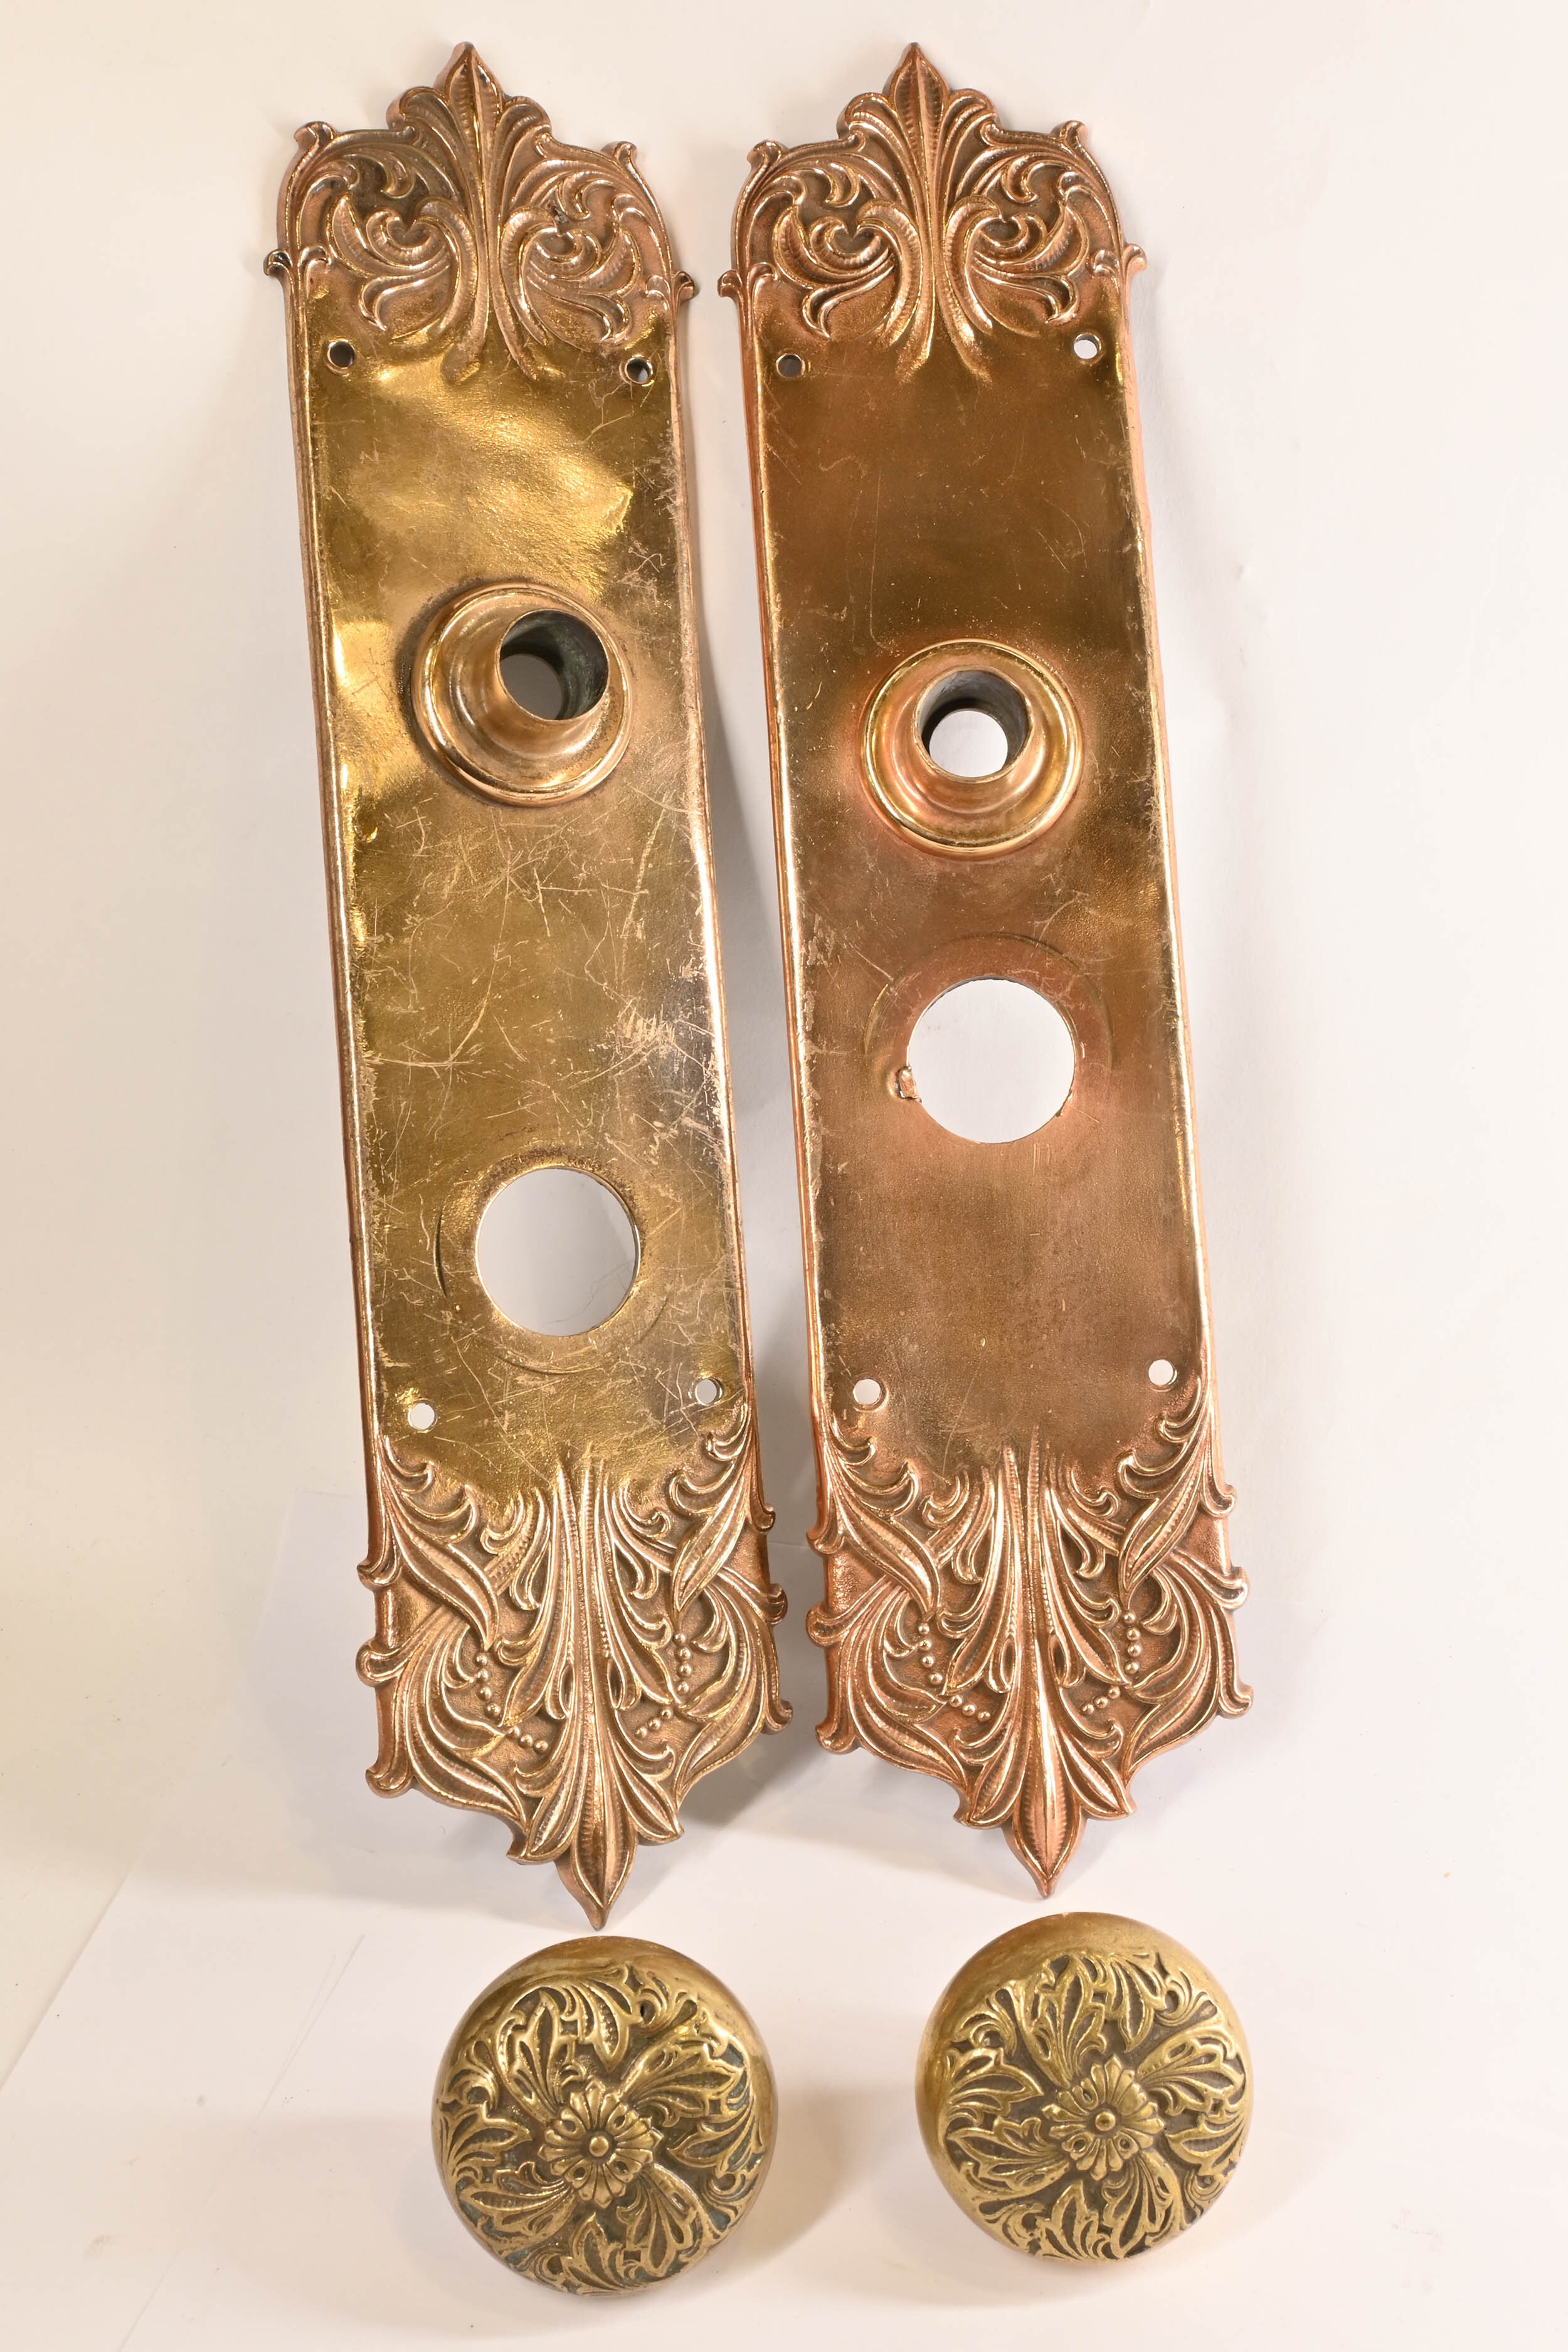 One original unused antique Art Nouveau Arts & Crafts handle key escutcheon 